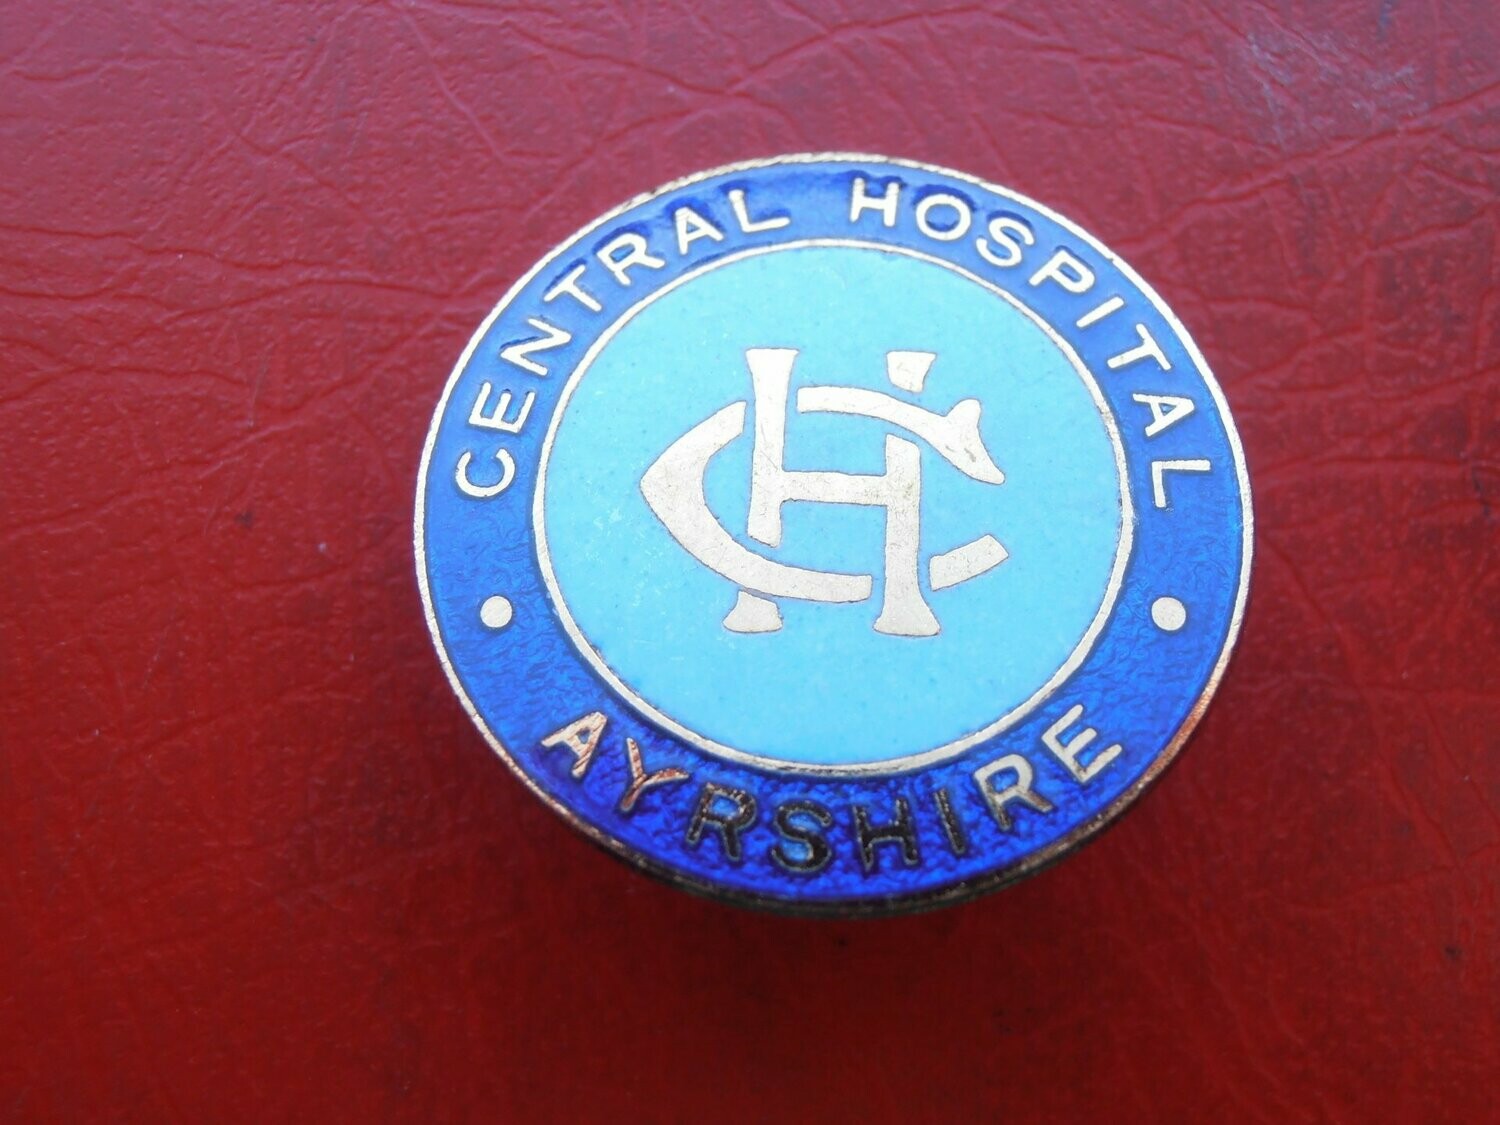 Central Hospital Ayrshire Badge